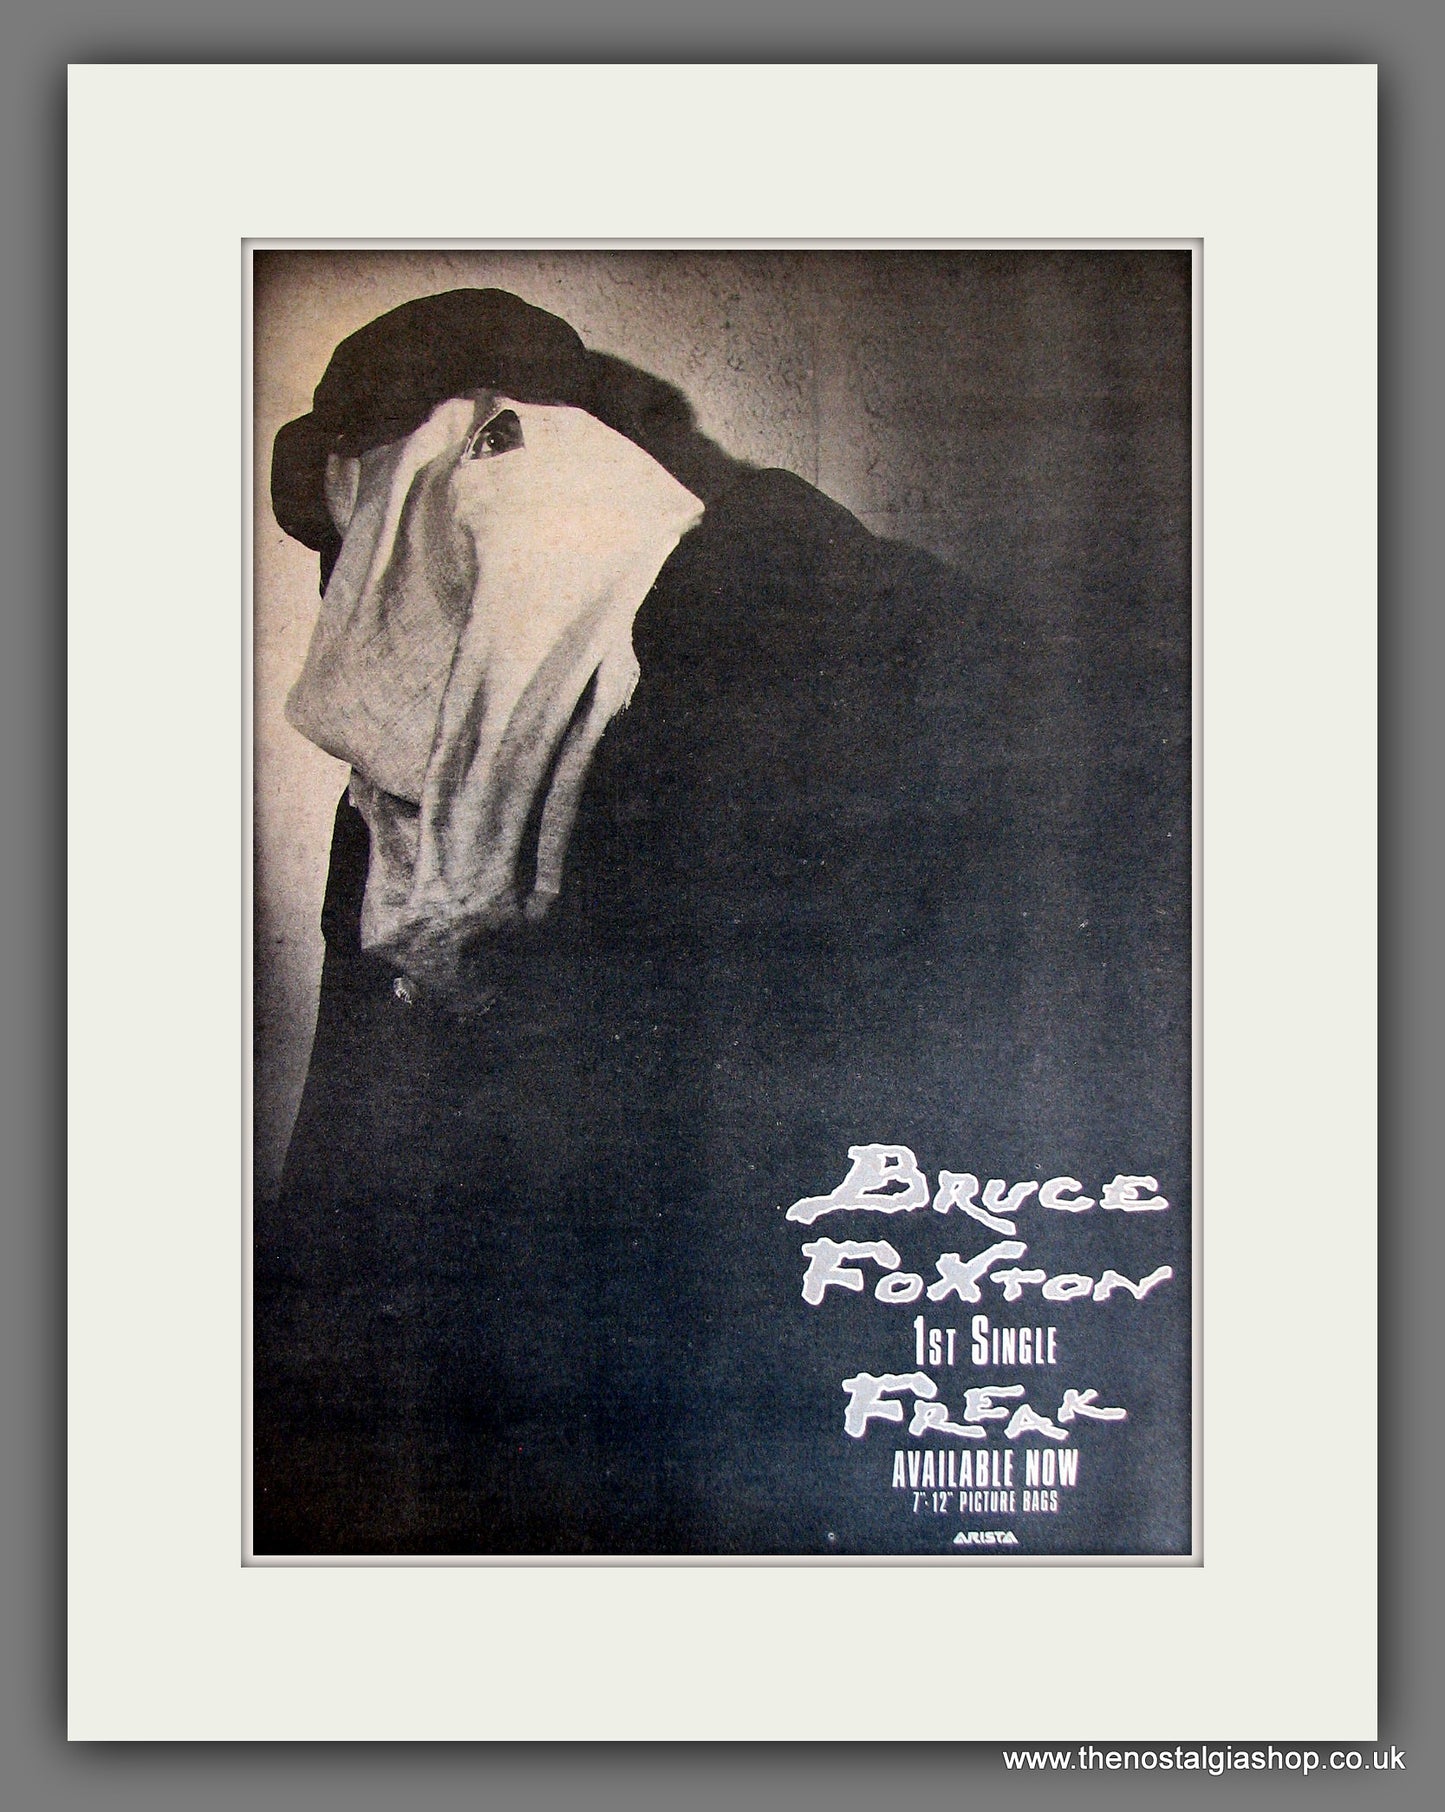 Bruce Foxton Freak. Vintage Advert 1983 (ref AD14042)